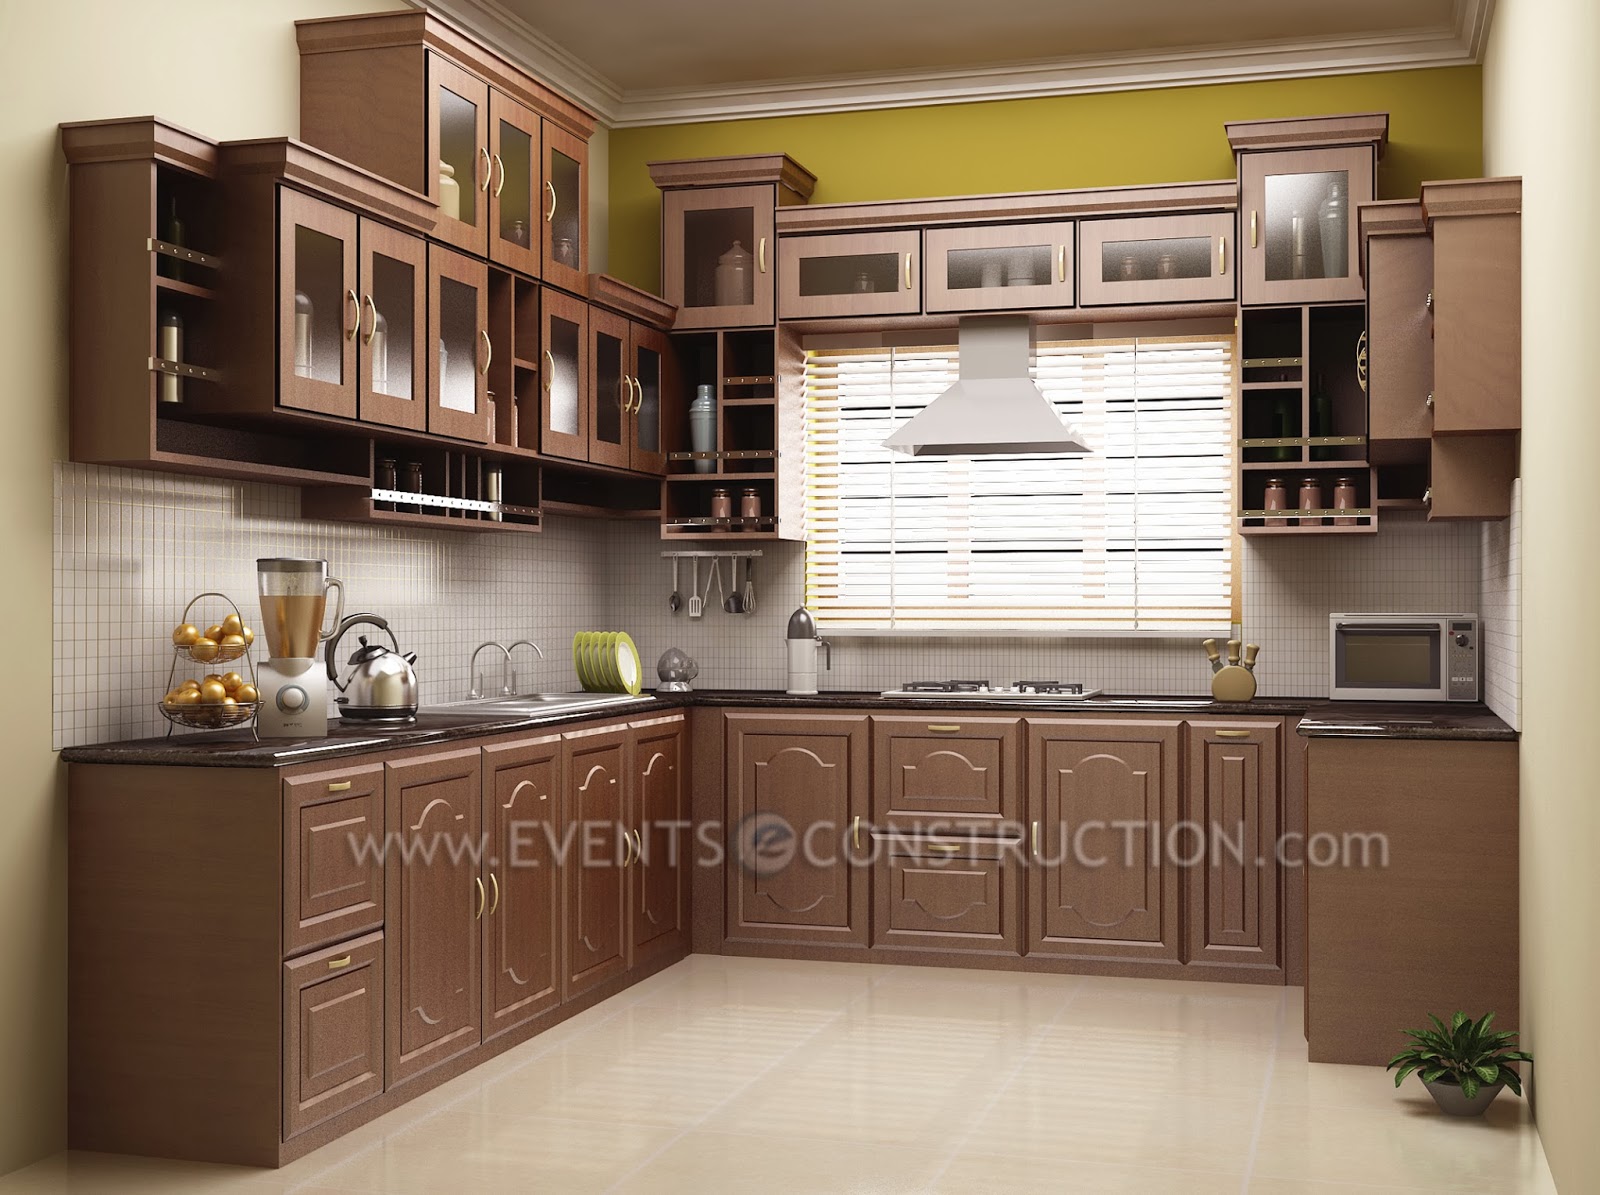 Evens Construction Pvt Ltd Kitchen Cabinets 